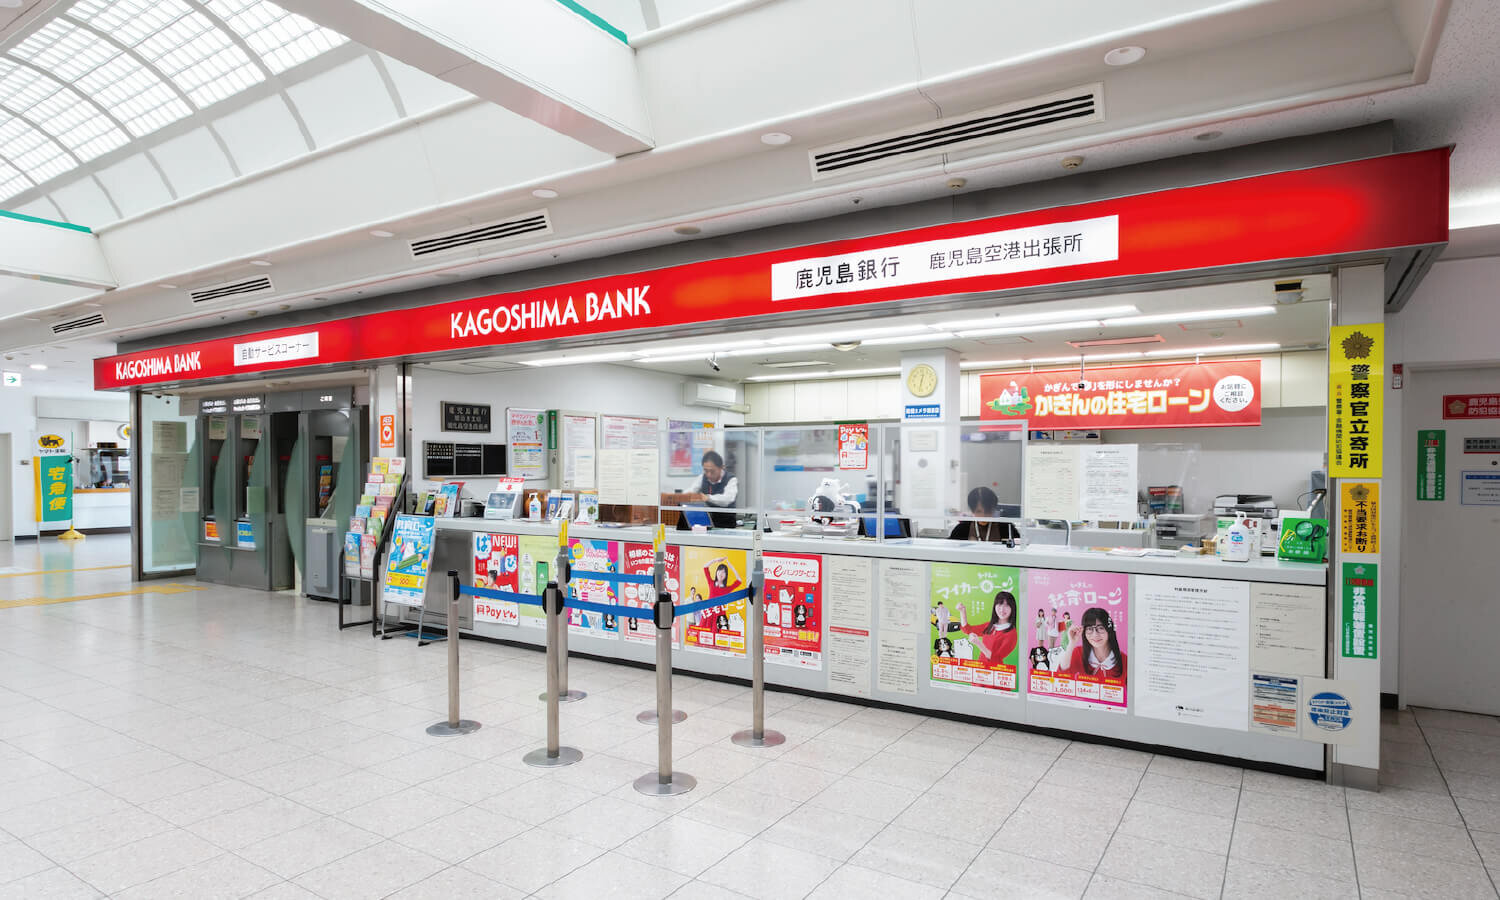 Kagoshima Bank　airport branch office